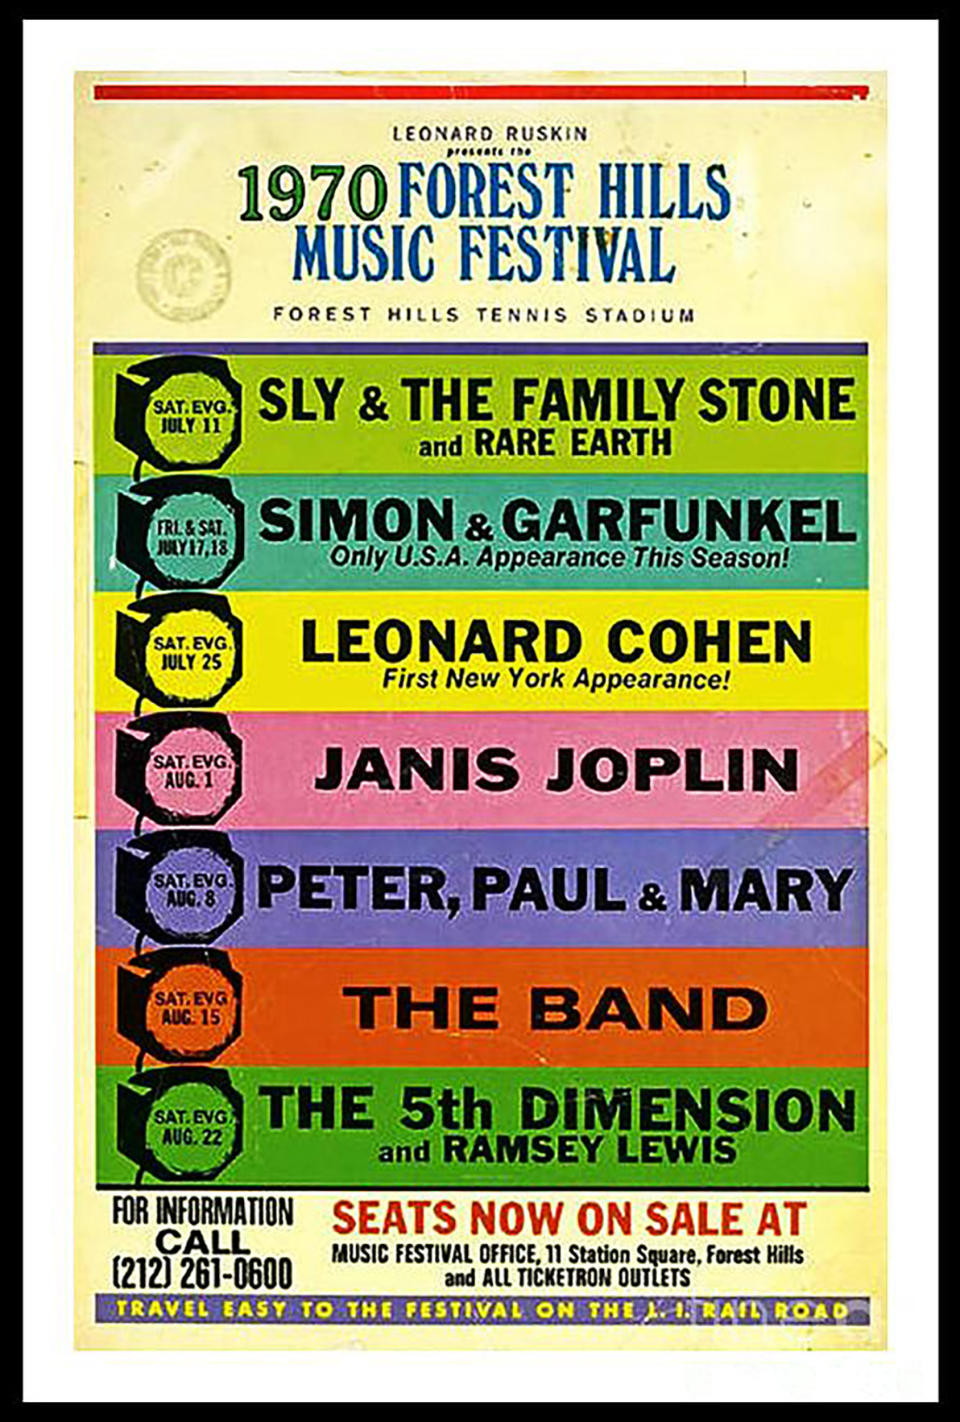 1970 Forest Hills Music Festival poster